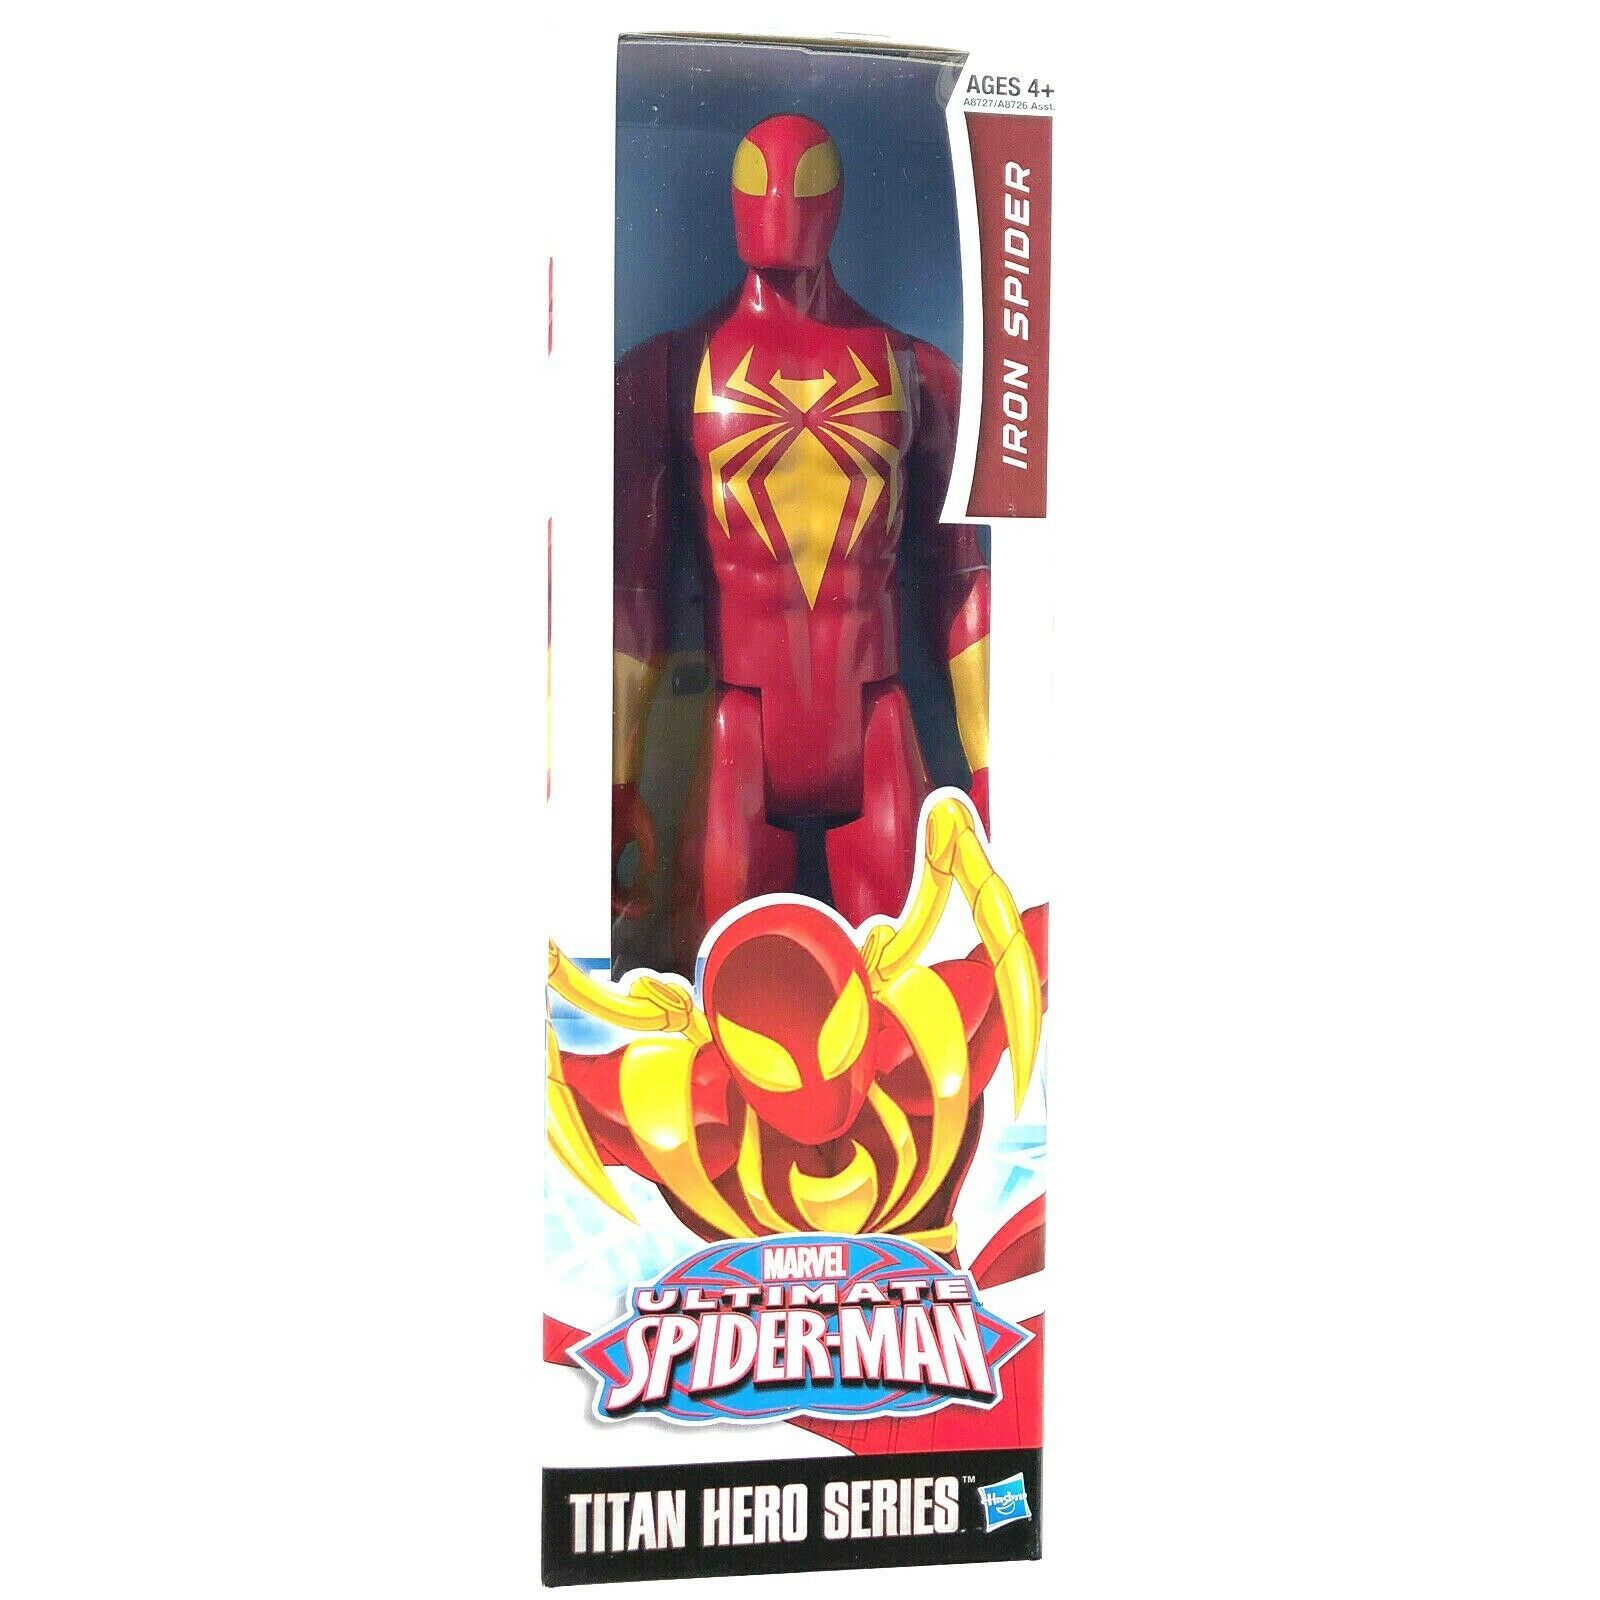 Hasbro Red & Gold 2019 Marvel Ultimate Spider-Man Titan Hero Series Iron Spider